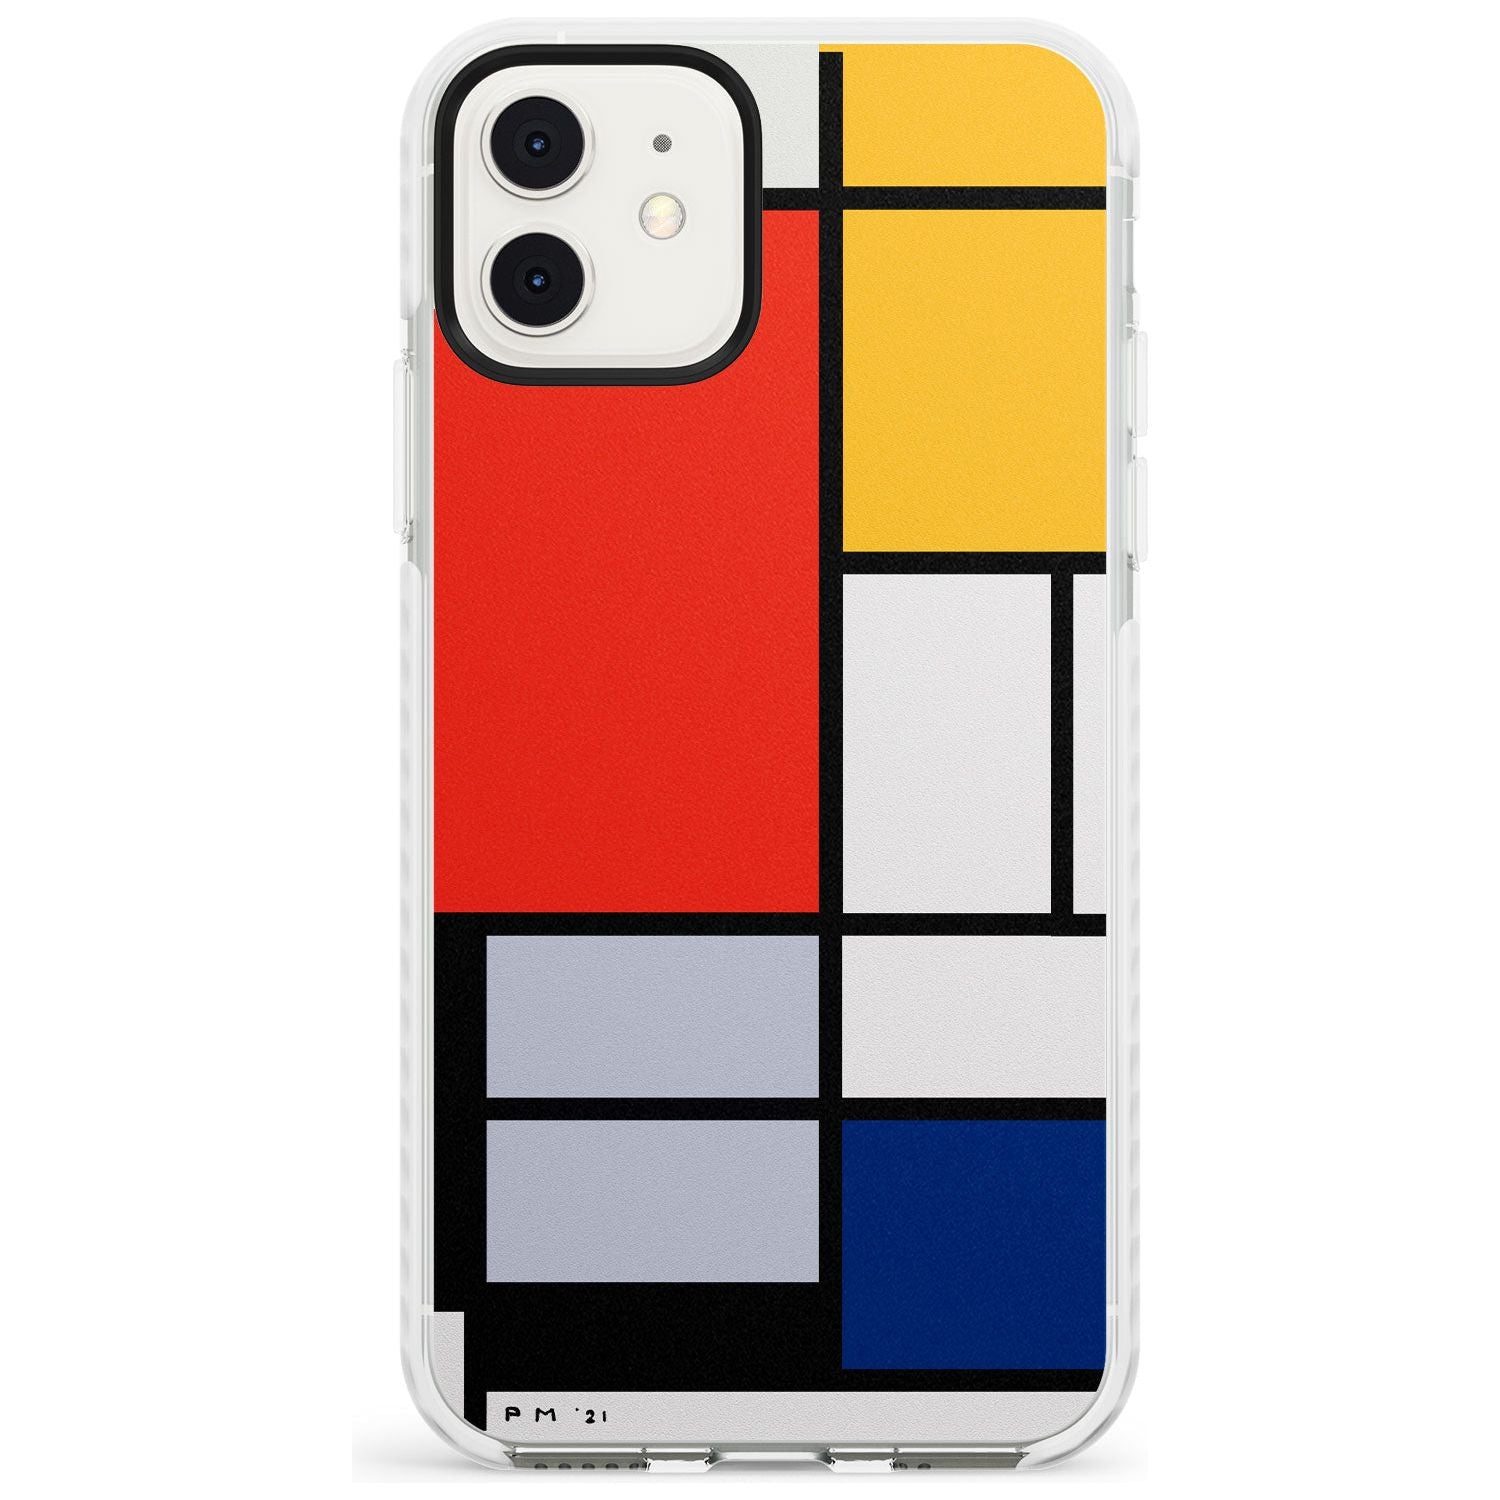 Piet Mondrian's Composition Impact Phone Case for iPhone 11